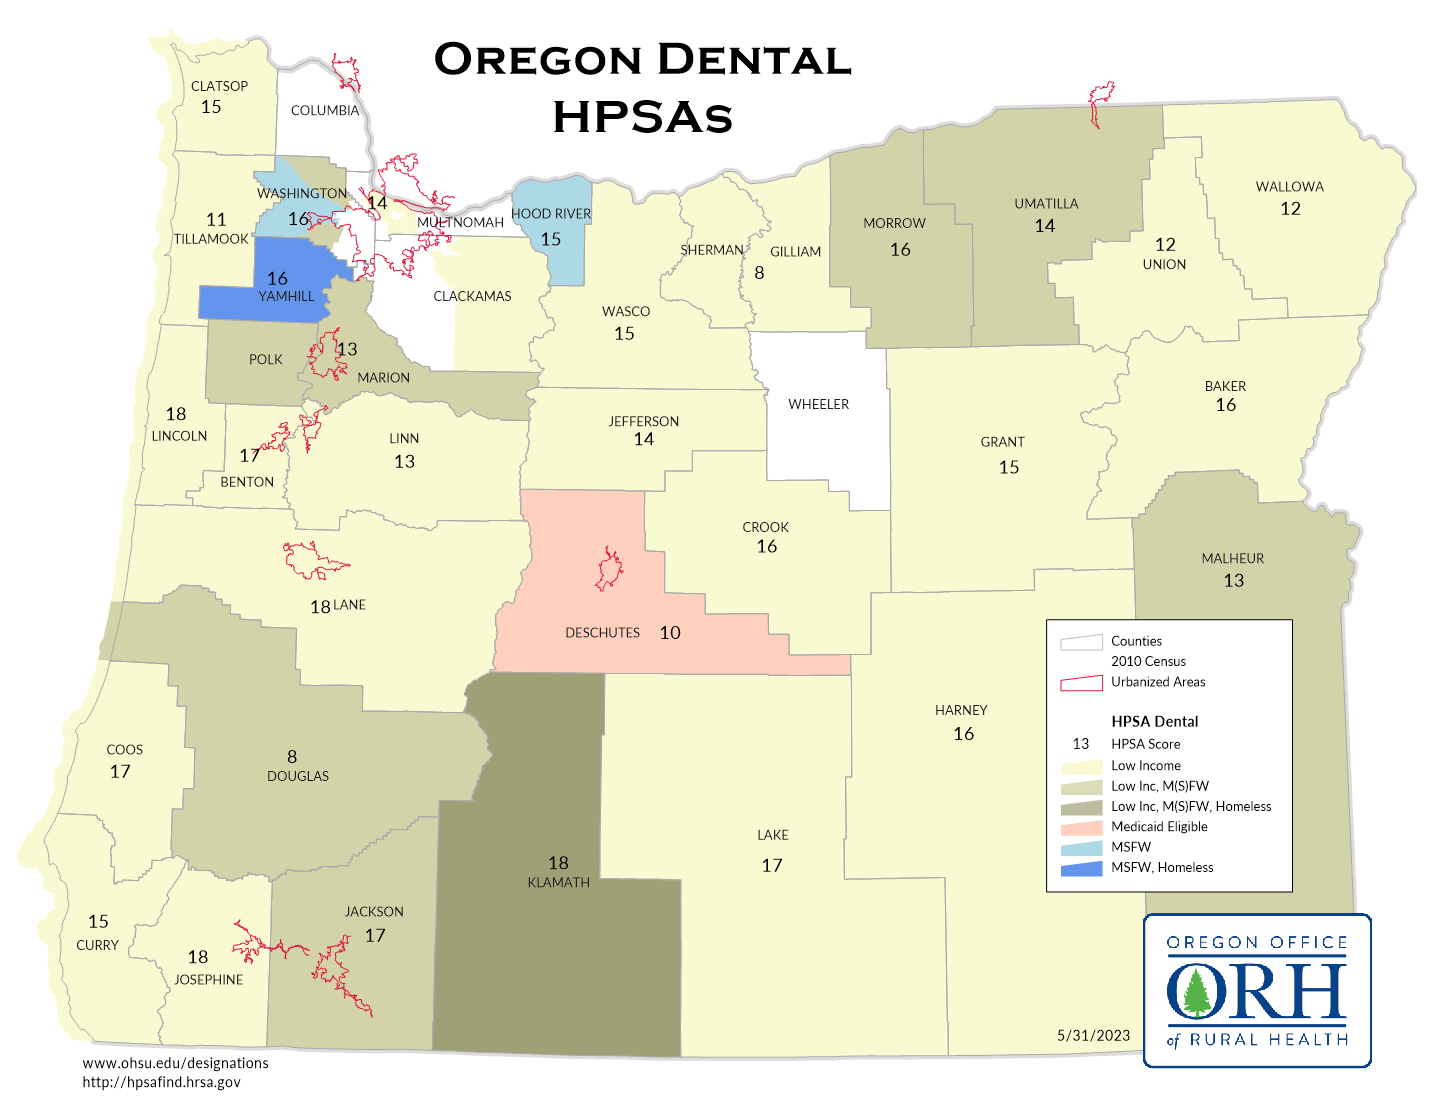 HPSA Dental Map